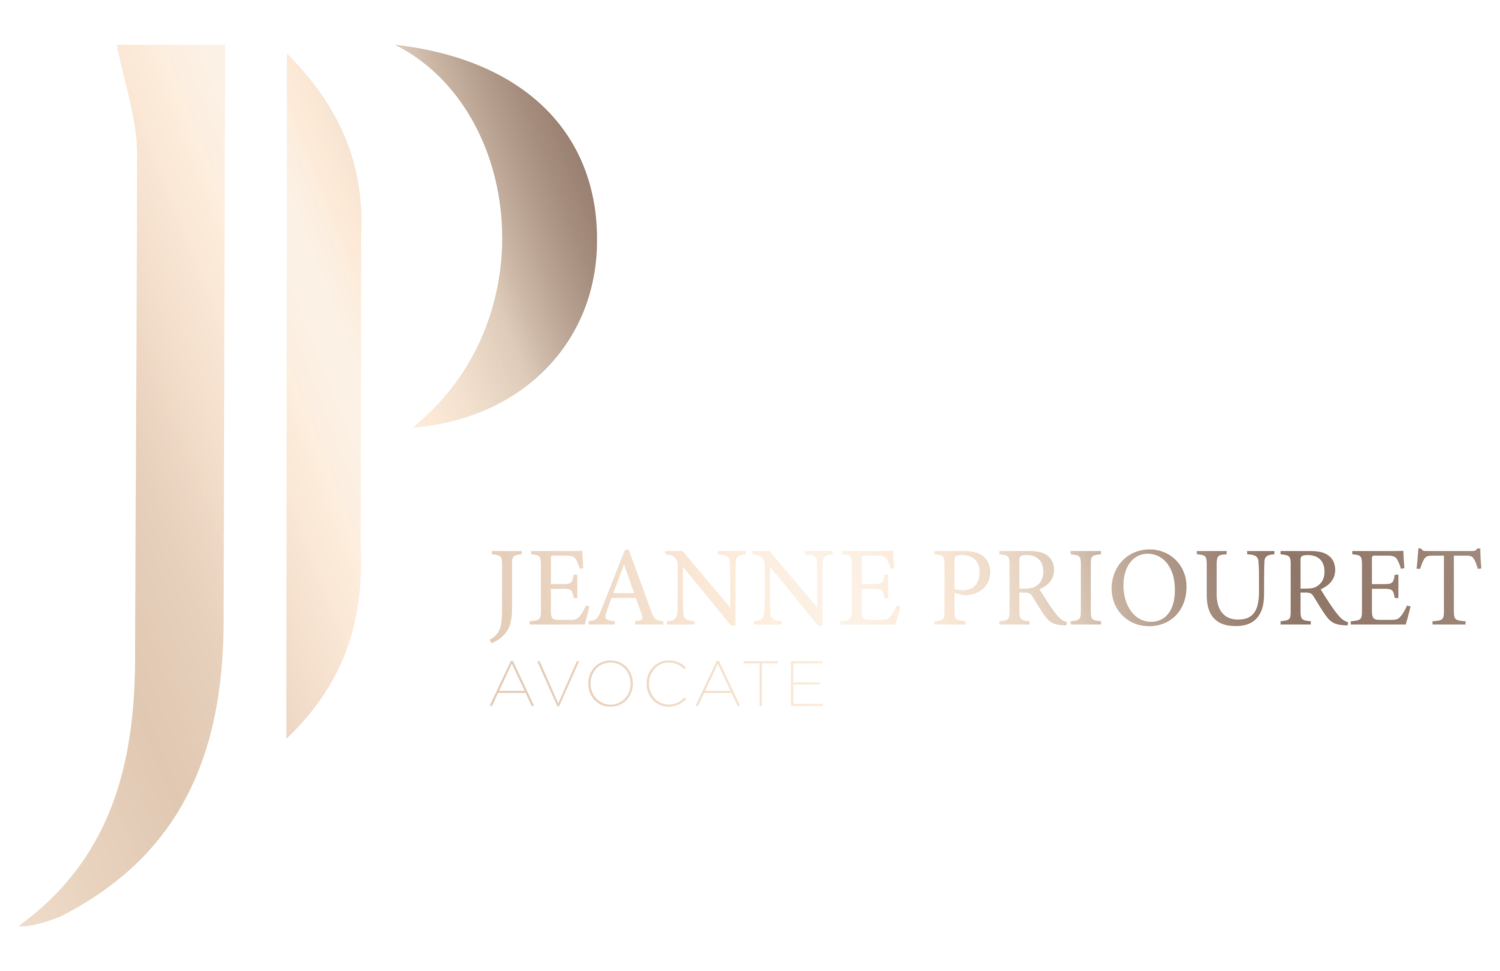 Jeanne Priouret